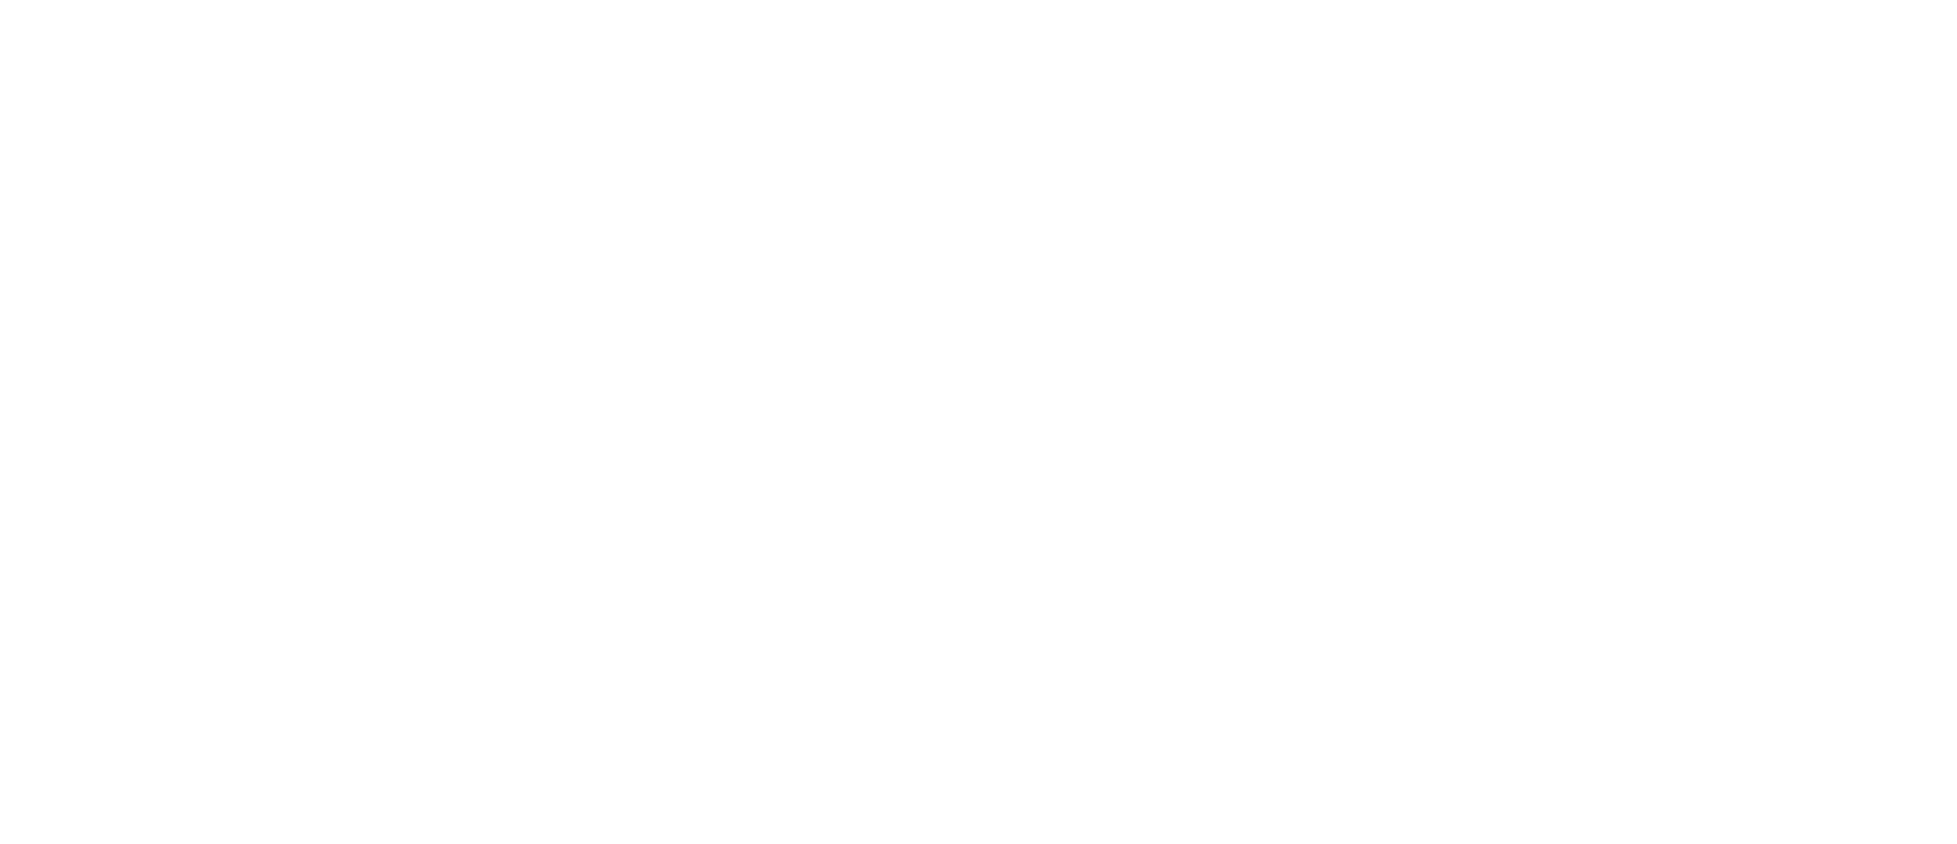 Malta Diocesan Archives